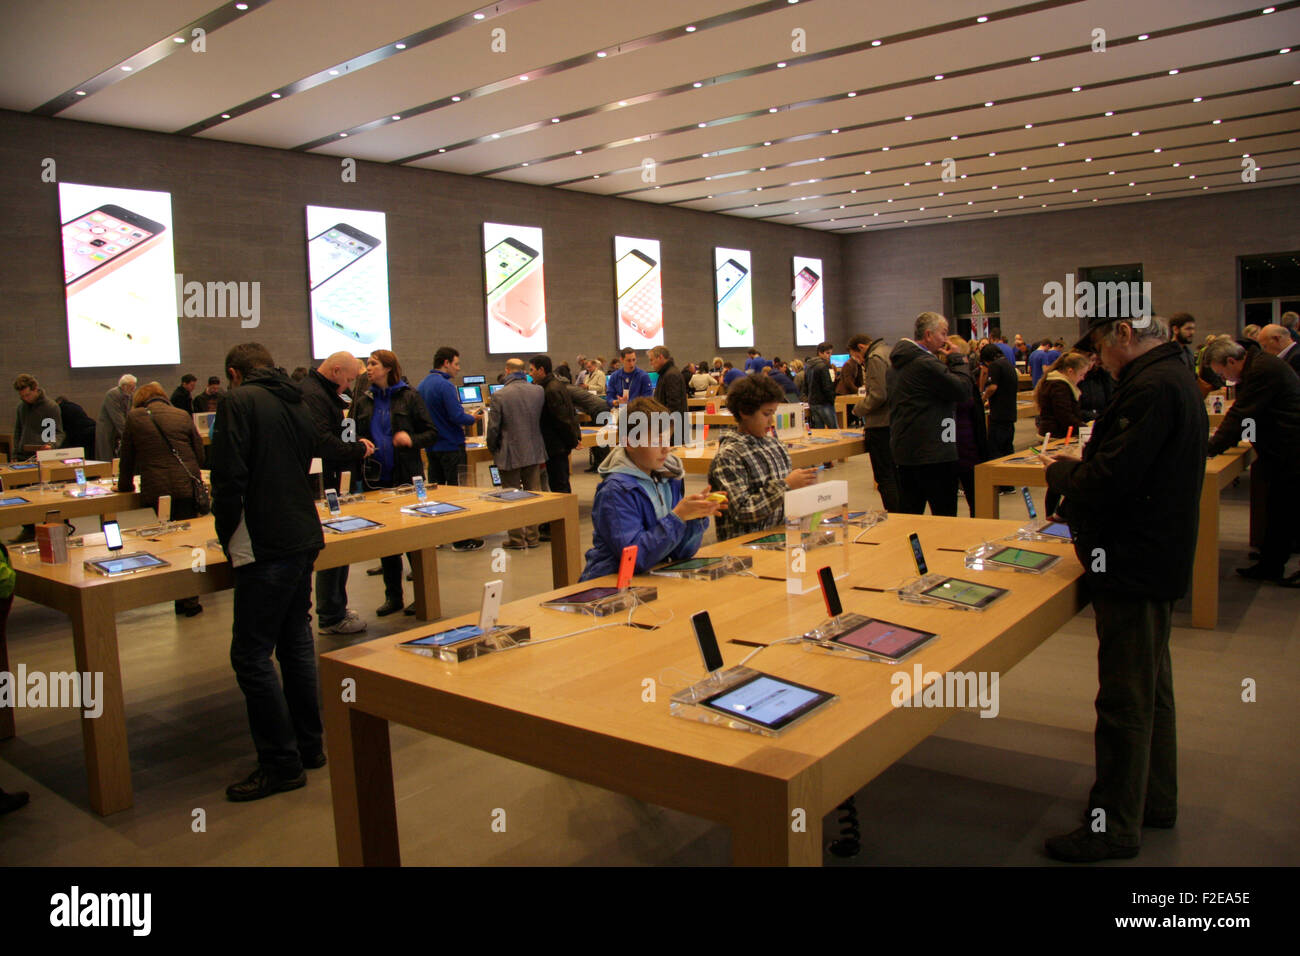 NOVEMBER 8, 2013 - BERLIN: the Apple Store at the Kurfuerstendamm in Berlin. Stock Photo